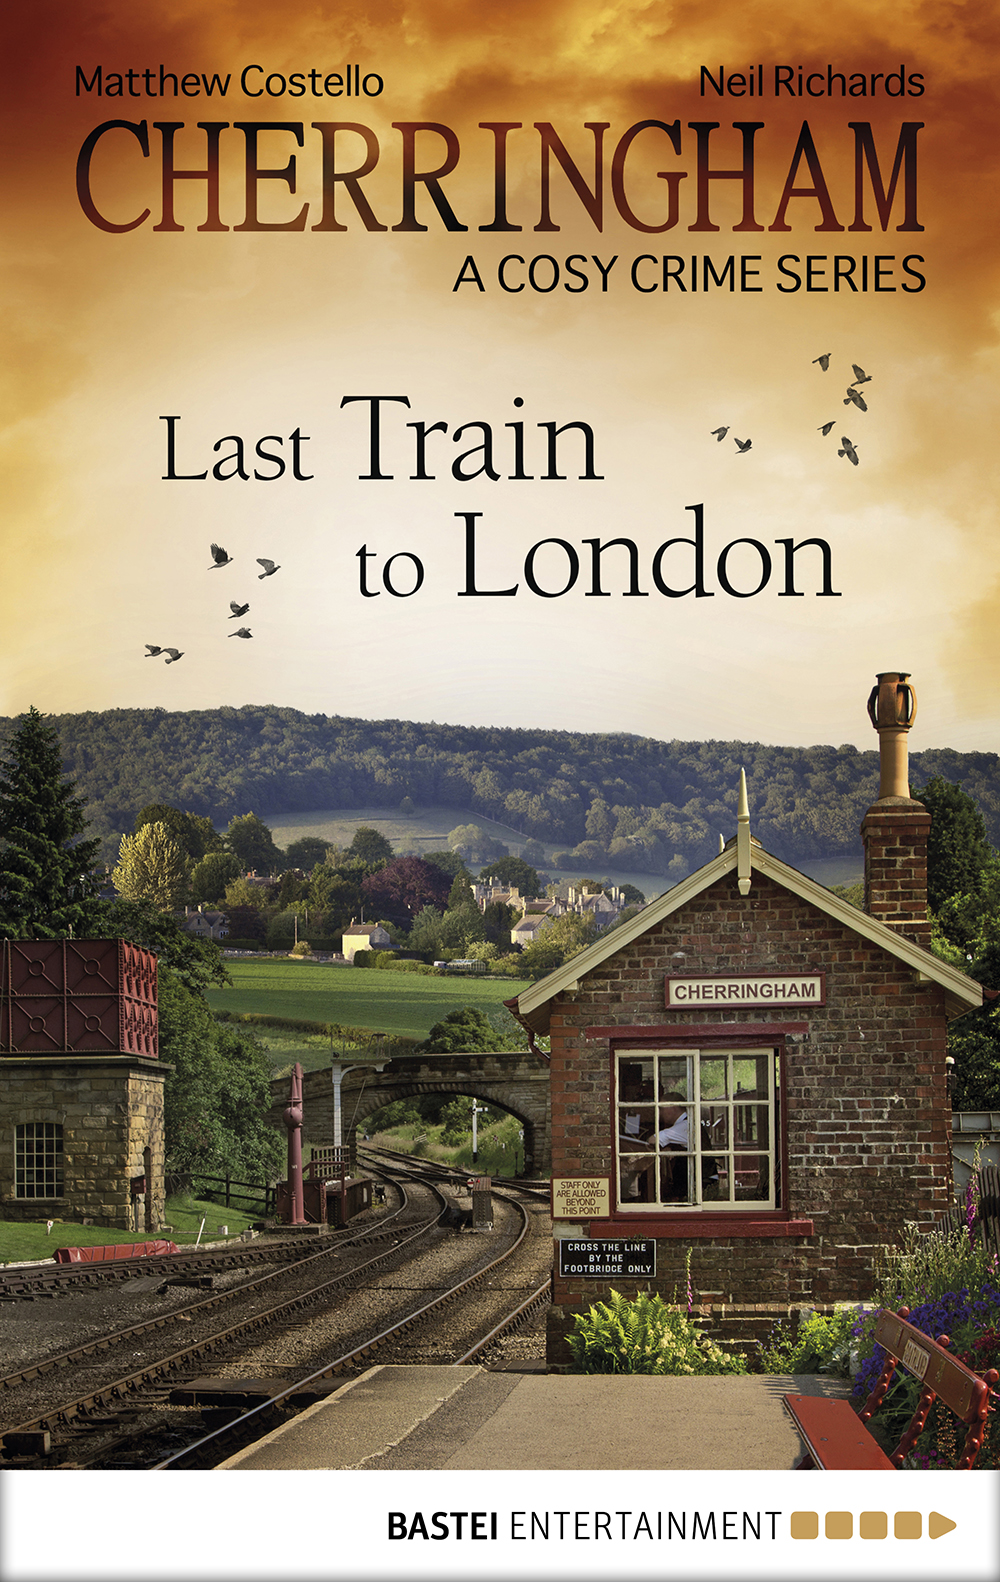 Cherringham--Last Train to London (2015)